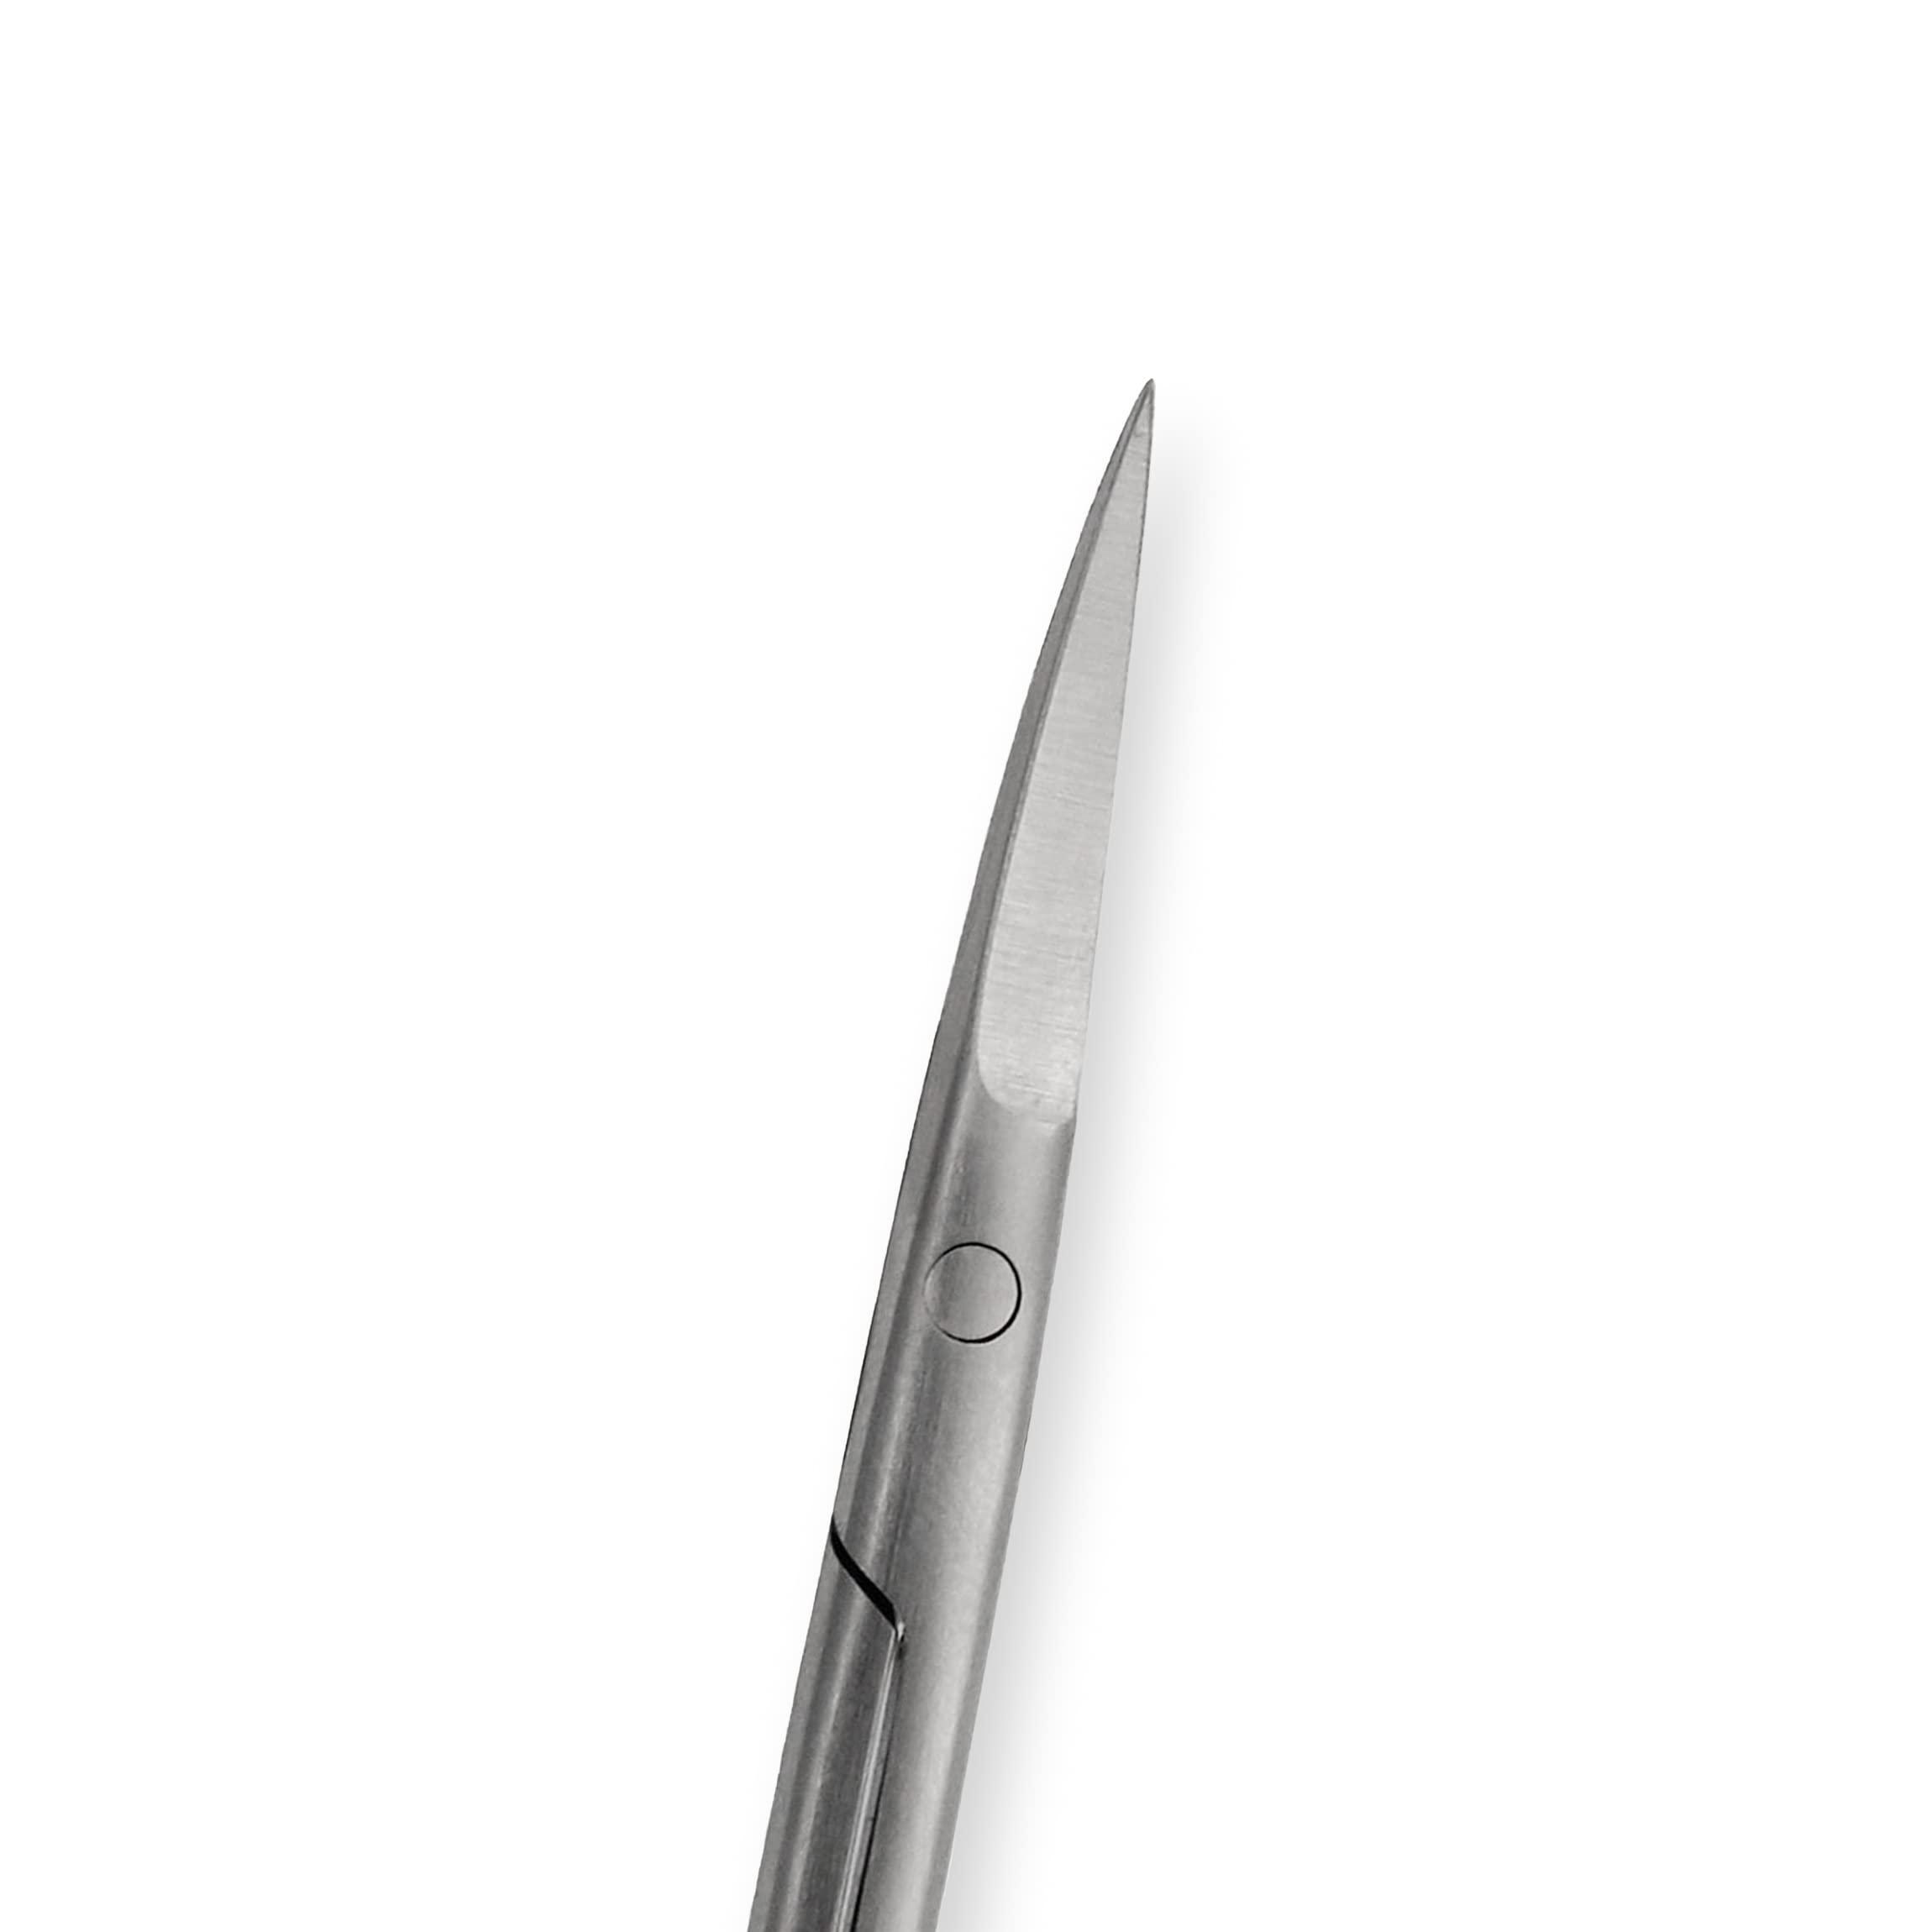 Amazon Basics Beauty Scissors, Stainless Steel, Silver